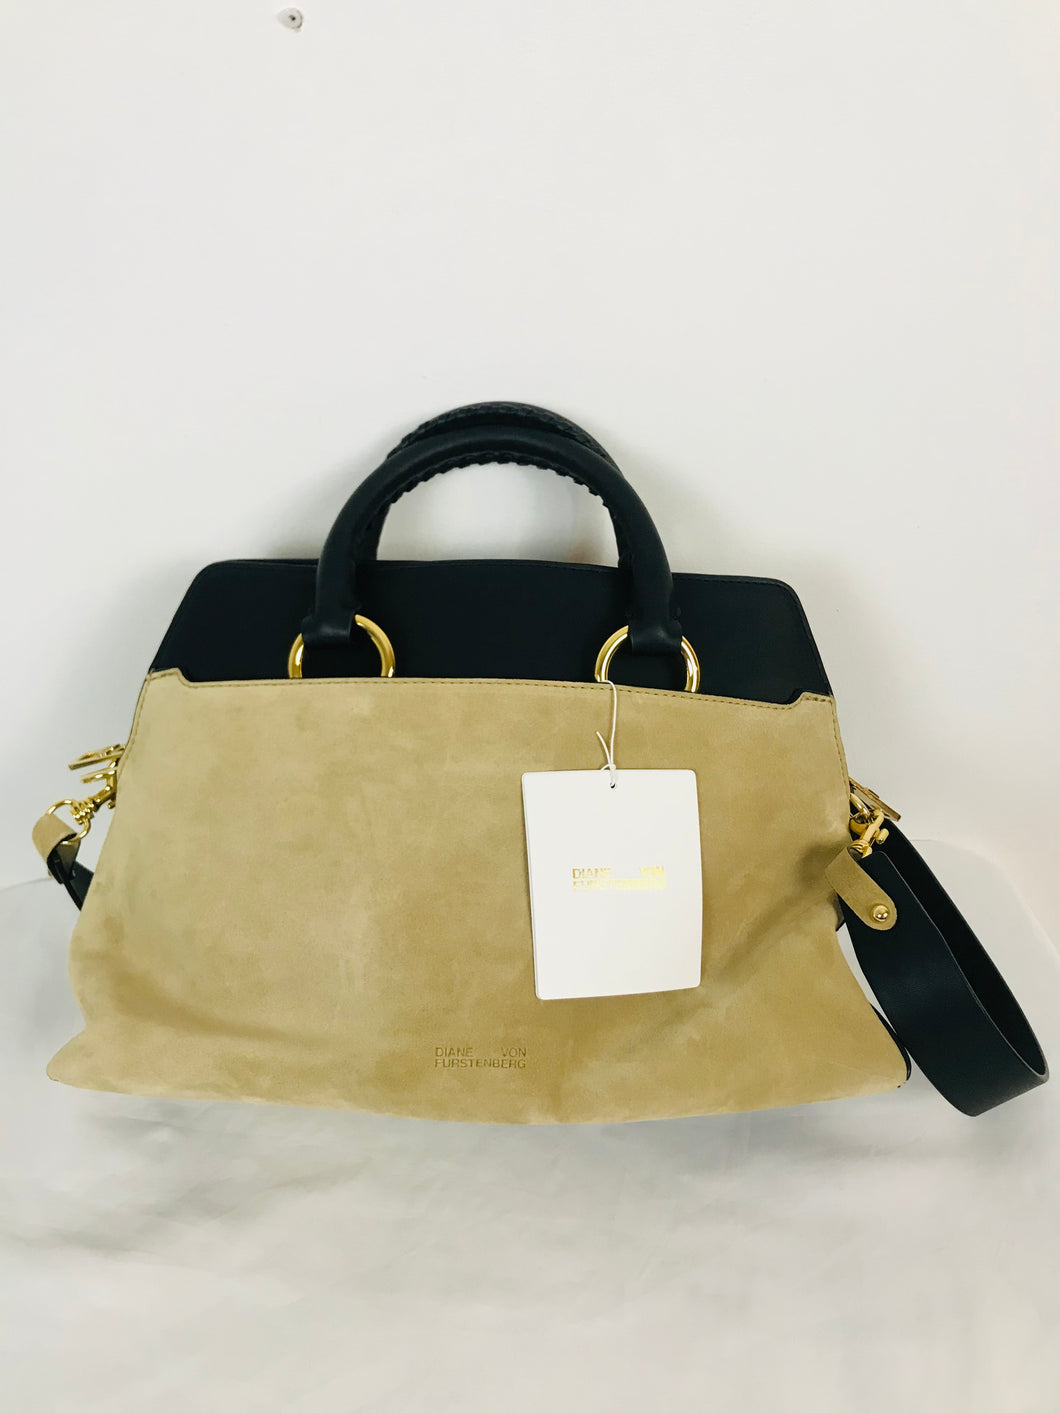 Diane von Furstenberg Leather Shoulder Bag NWT | Black and Beige